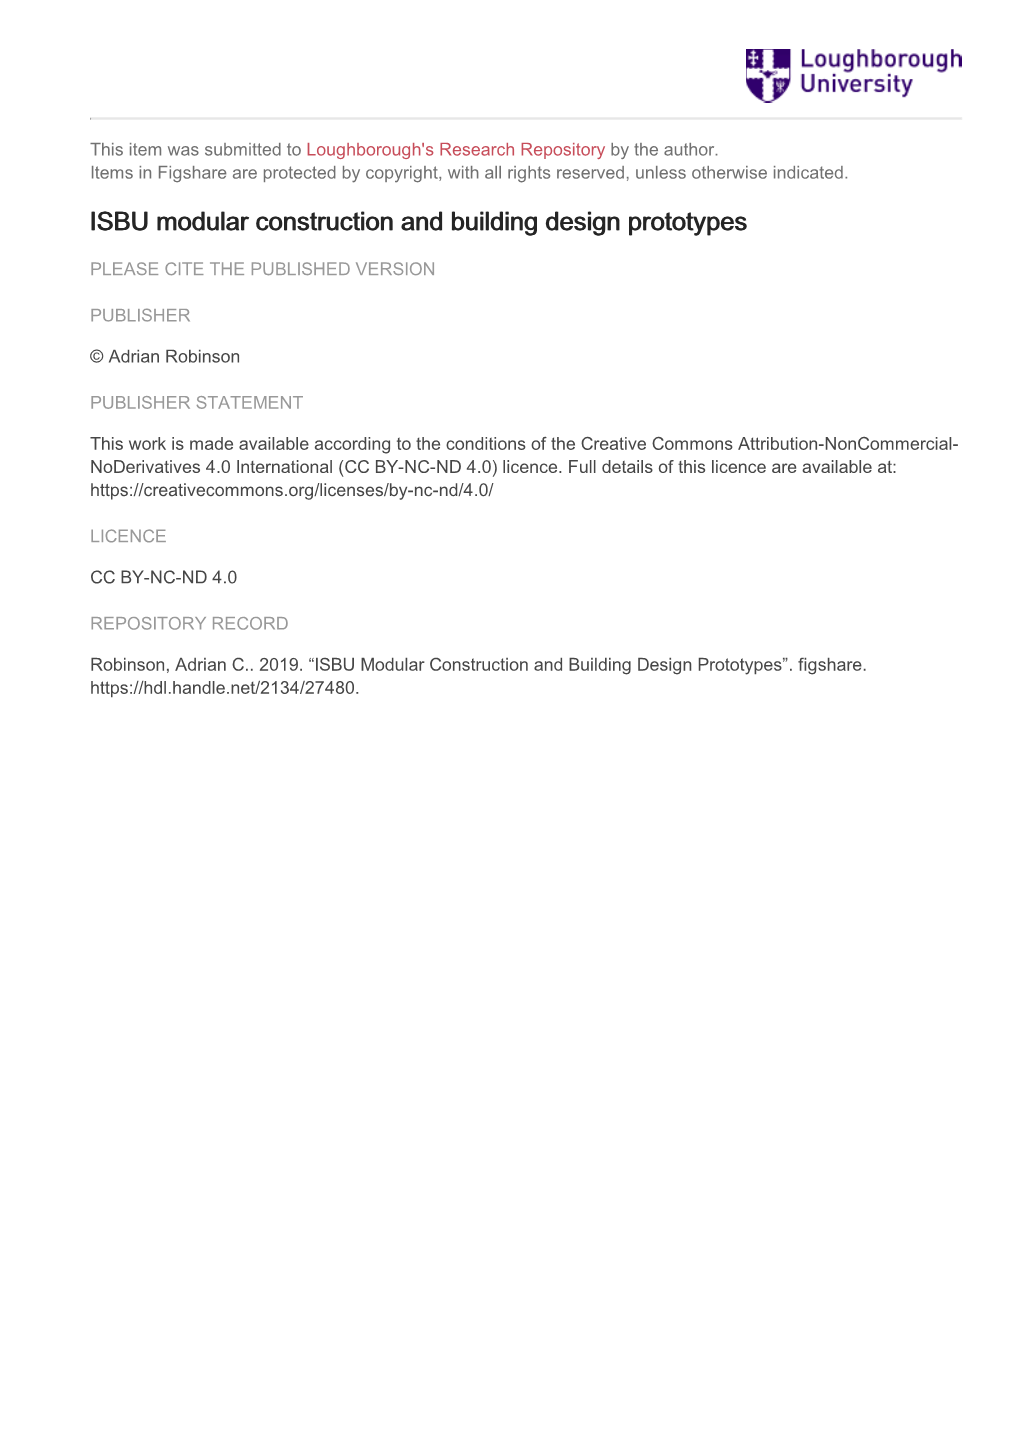 ISBU Modular Construction and Building Design Prototypes